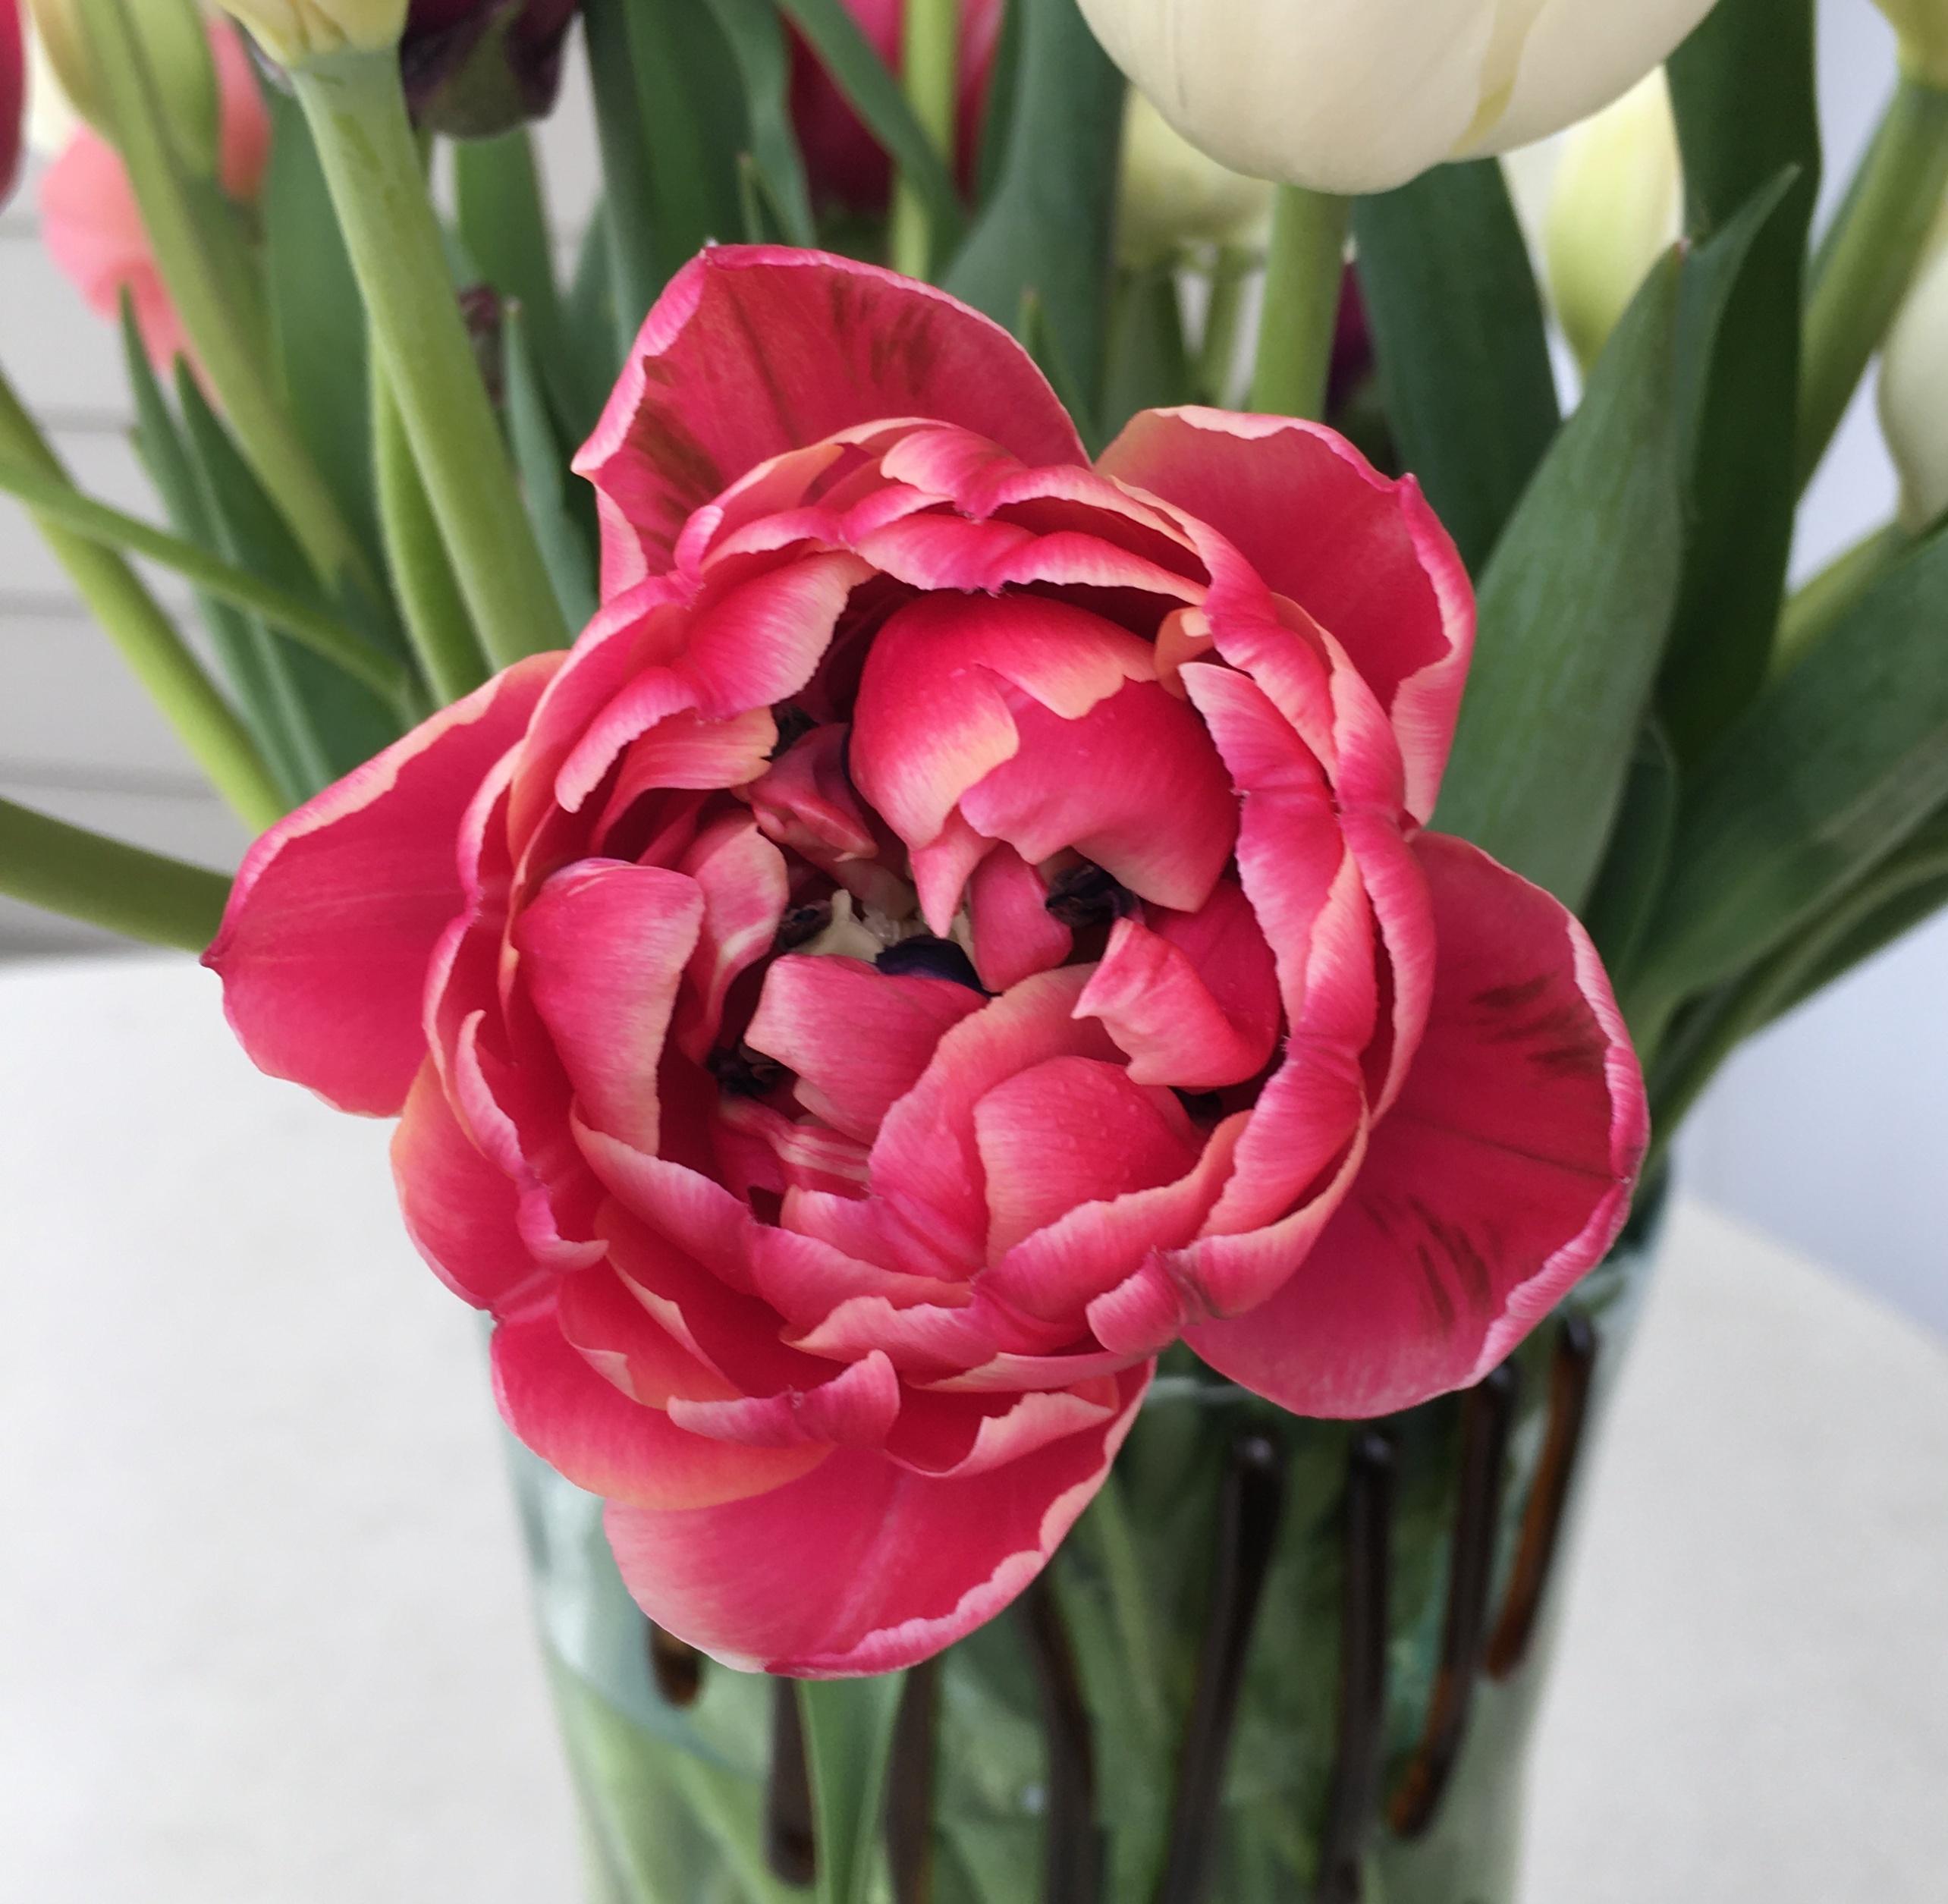 Tulip Double Early 'Columbus' - Tulip from Leo Berbee Bulb Company